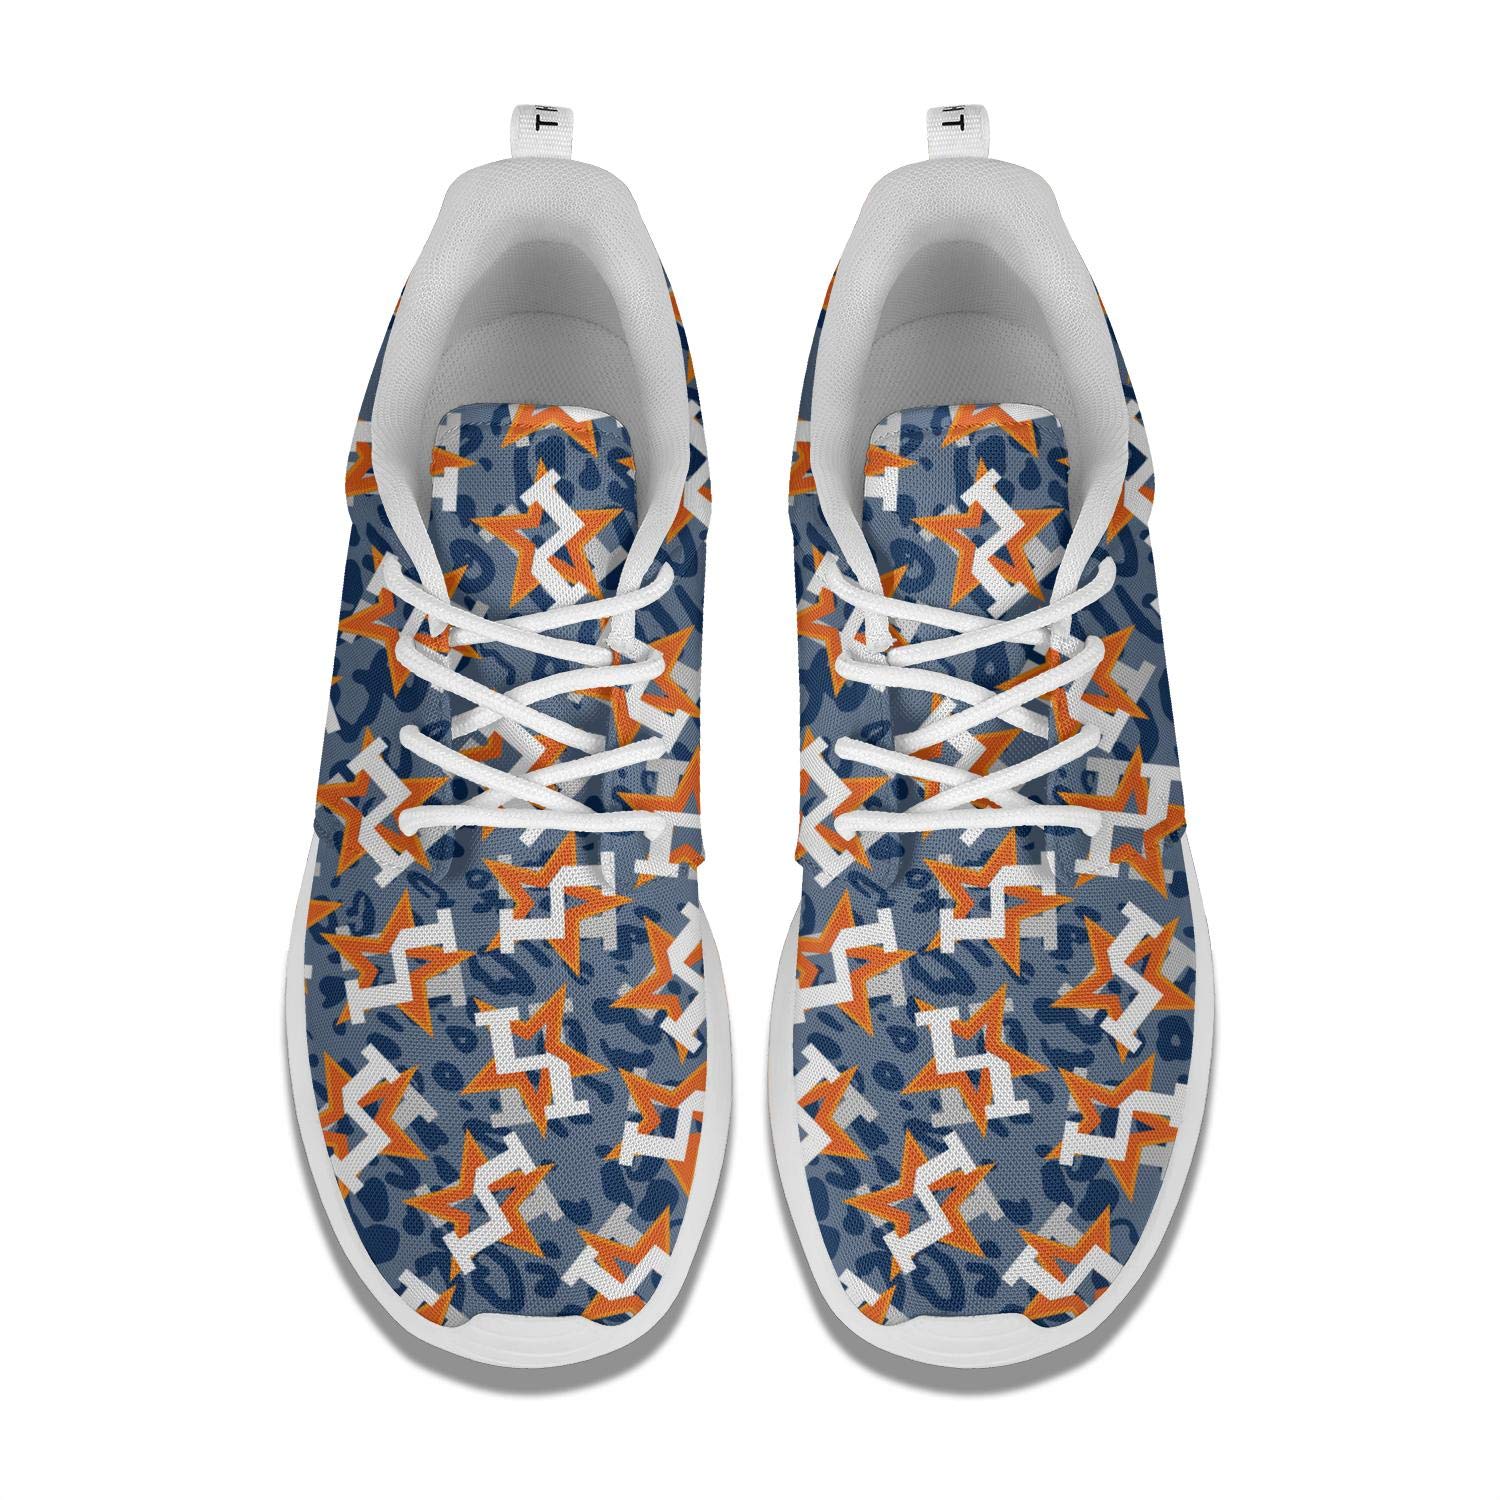 Hobart dfgrwe Camouflage Orange Star Baseball Women Flat Bottom Casual Shoes Light Sneakers